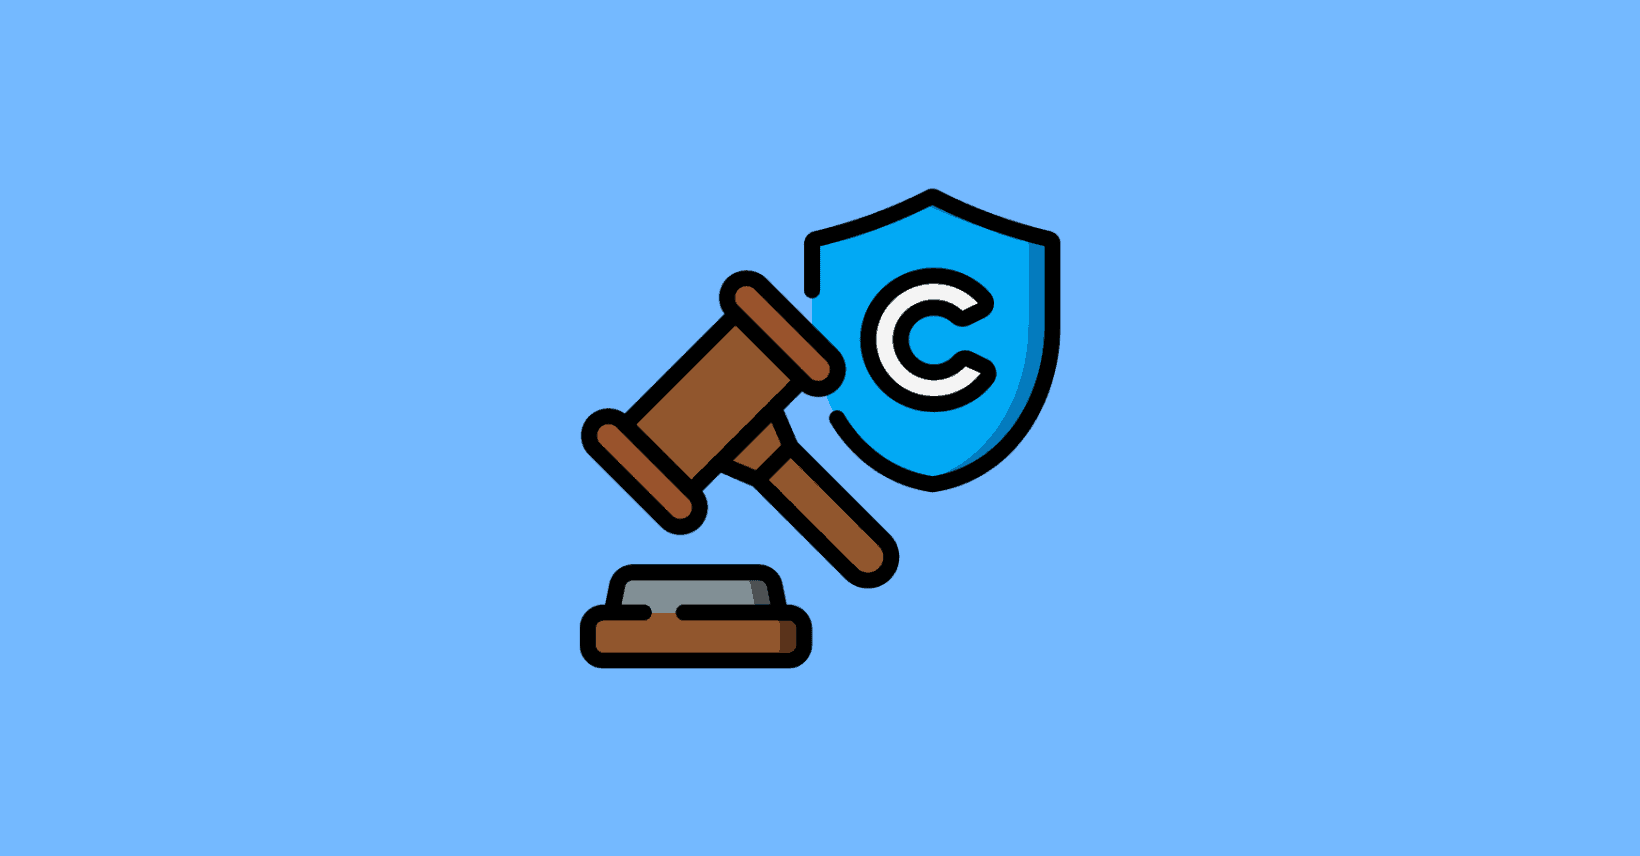 Blog Copyright How To Copyright A Blog &Amp; Avoid Infringement Fi